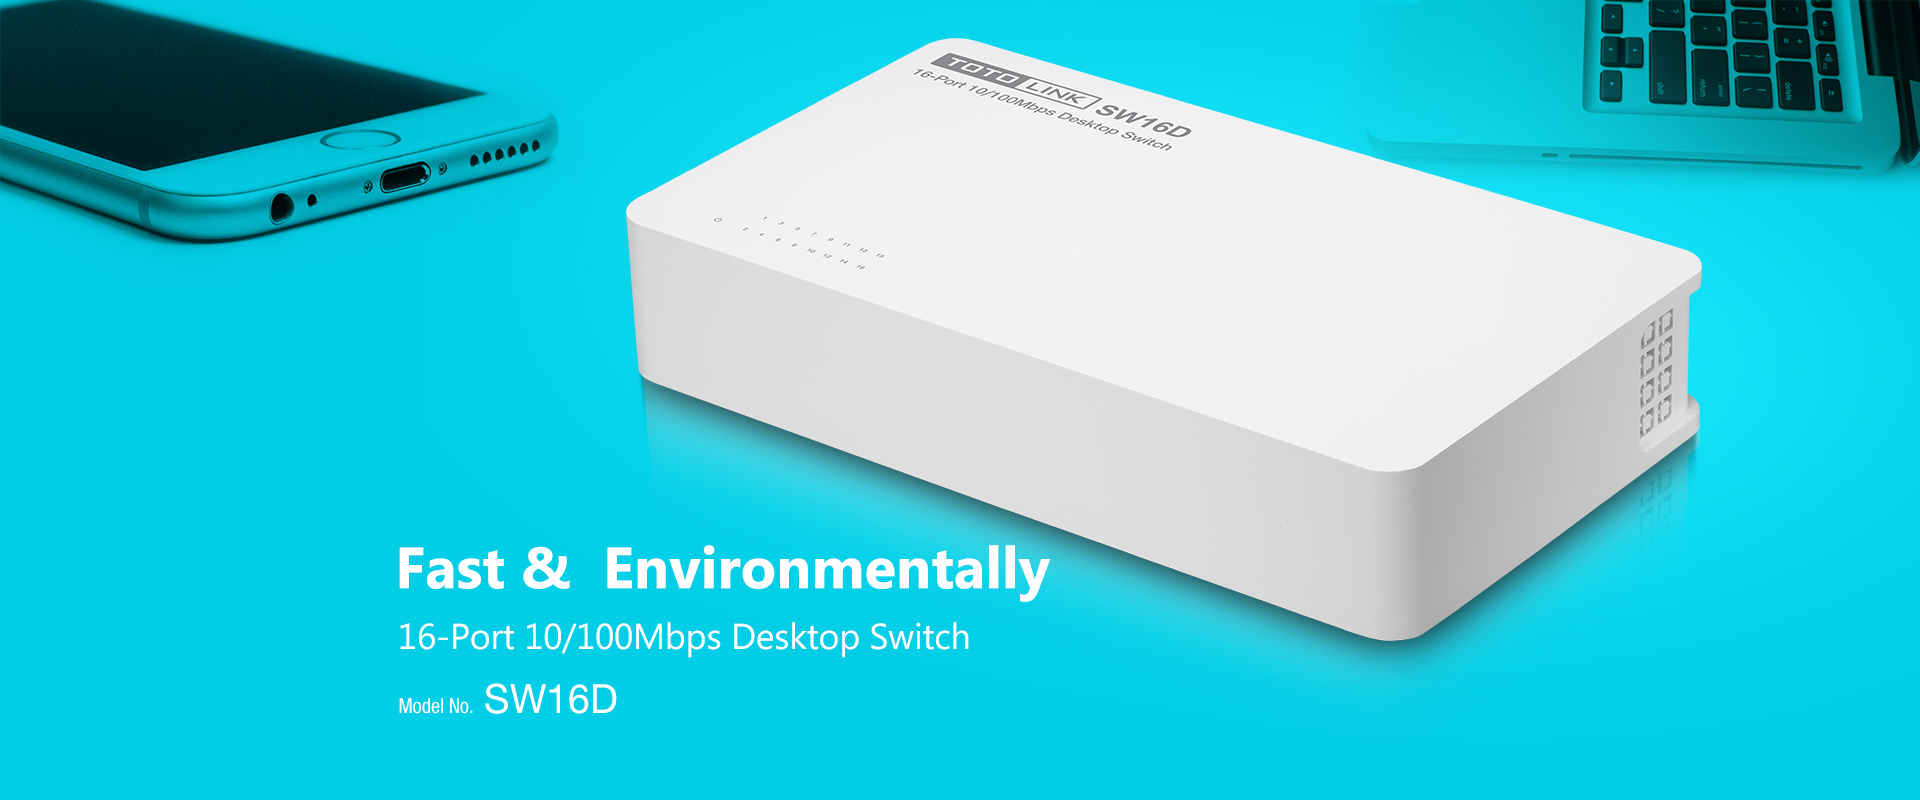 Sw16D-16-Port-10-100Mbps-Desktop-switch